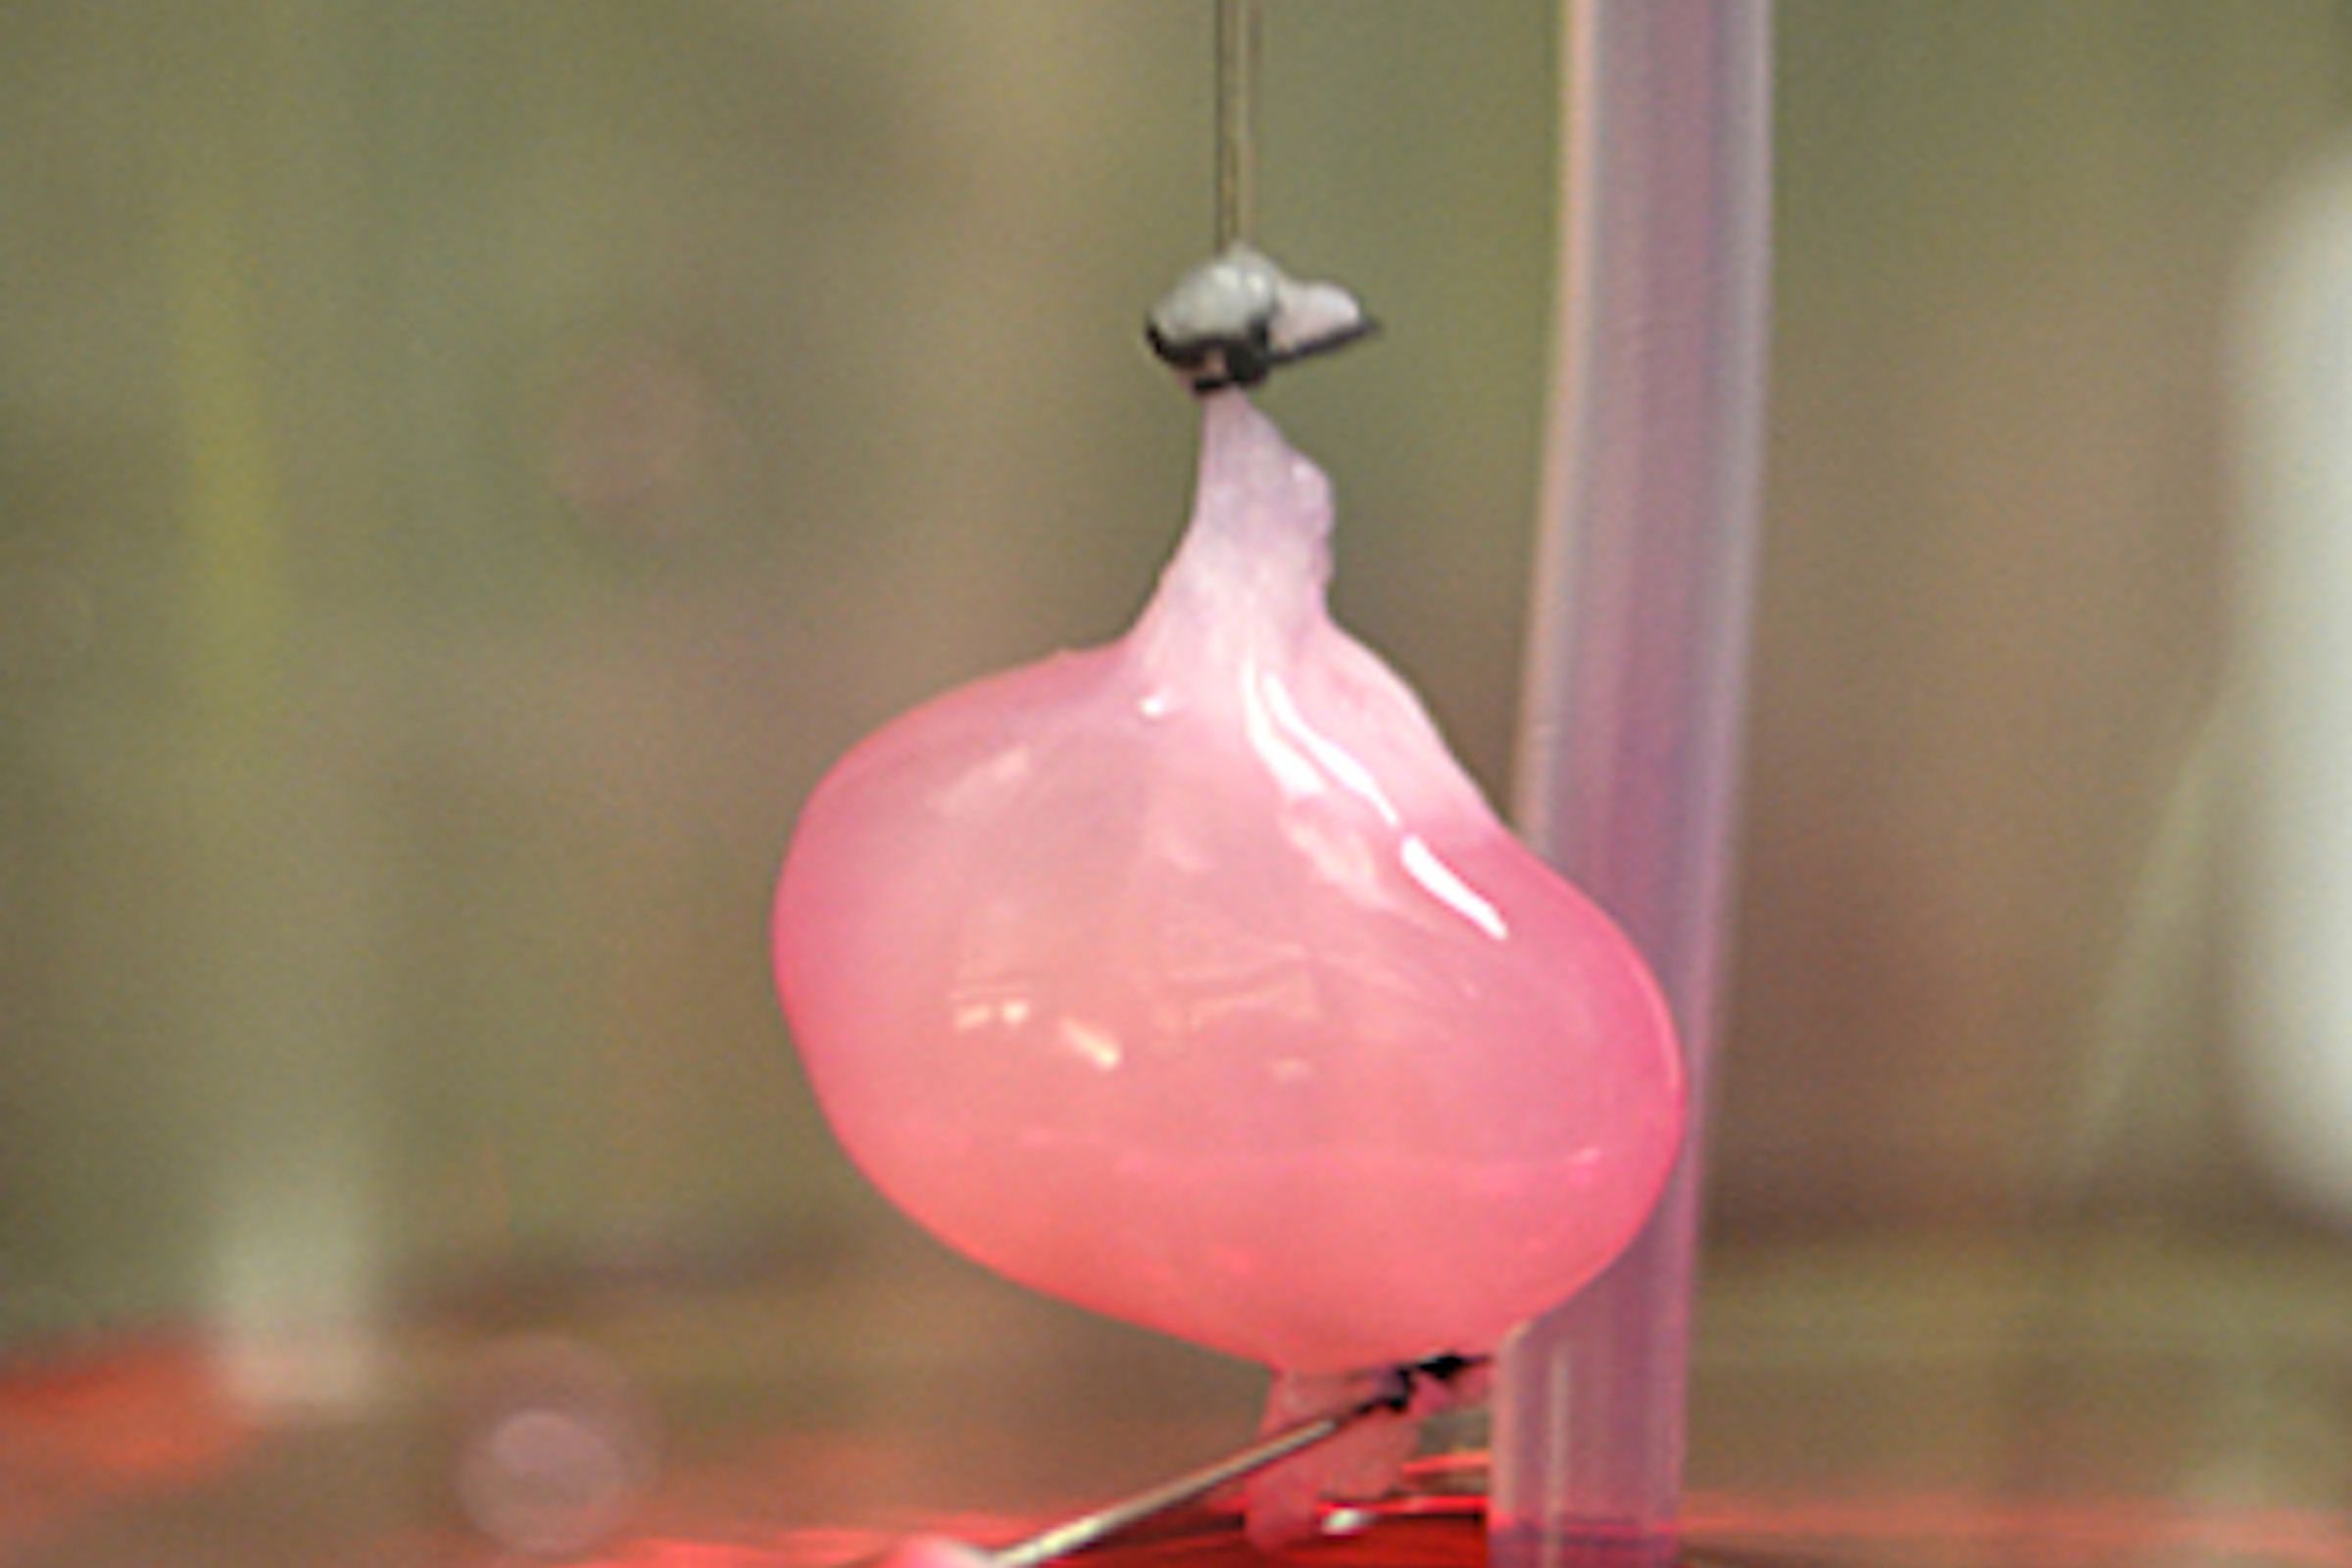 rat kidney grown in lab from Massachusetts General Hospital